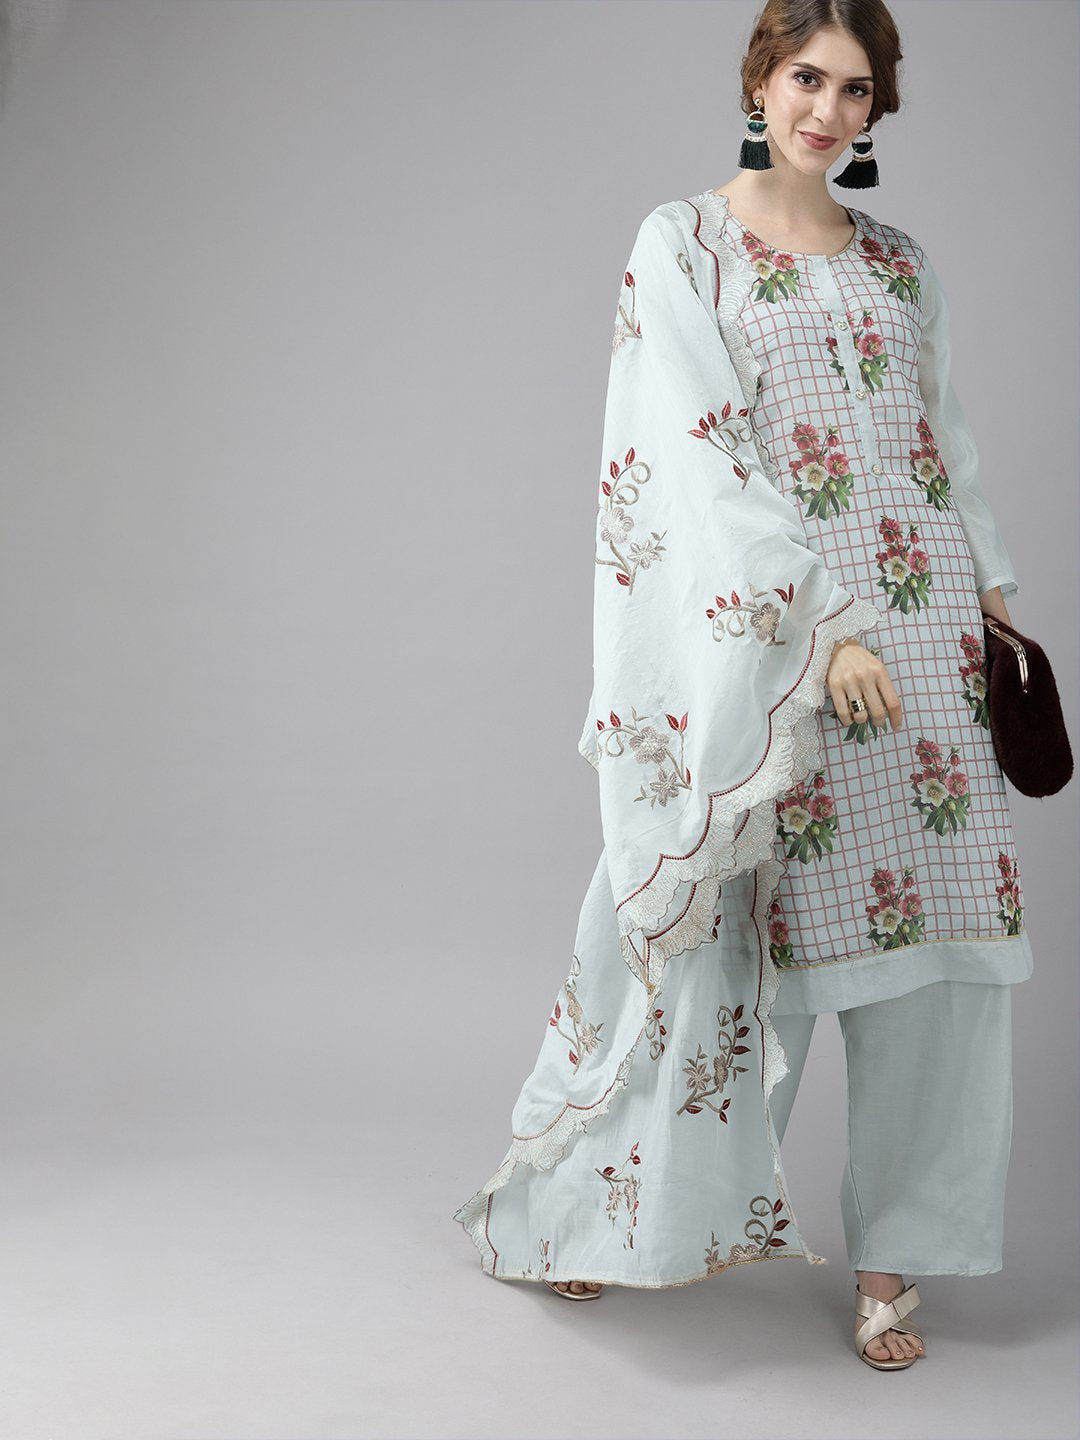 Ishin Women's Chanderi Grey Floral Printed A-Line Kurta Palazzo With Embroidered Dupatta